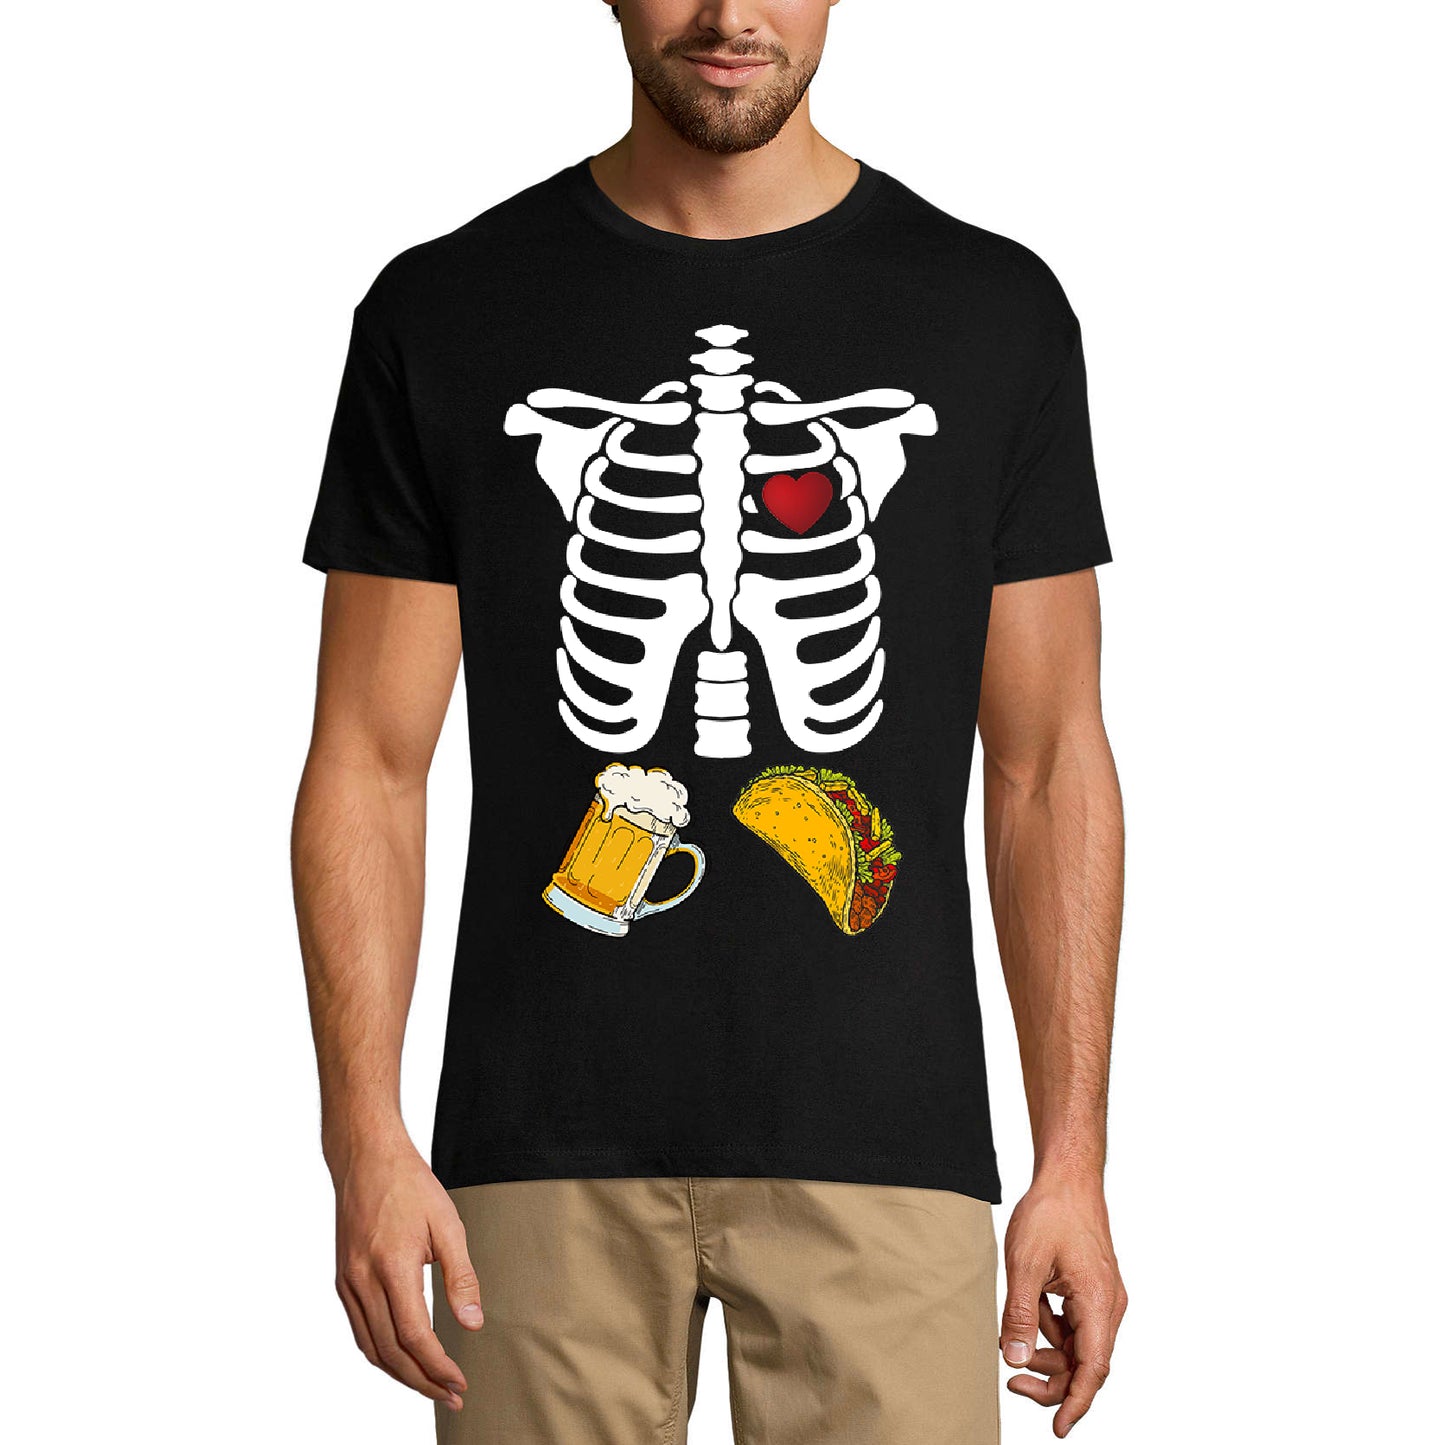 ULTRABASIC Men's T-Shirt Beer Tacos Skeleton - Funny Sarcasm Humor Tee Shirt